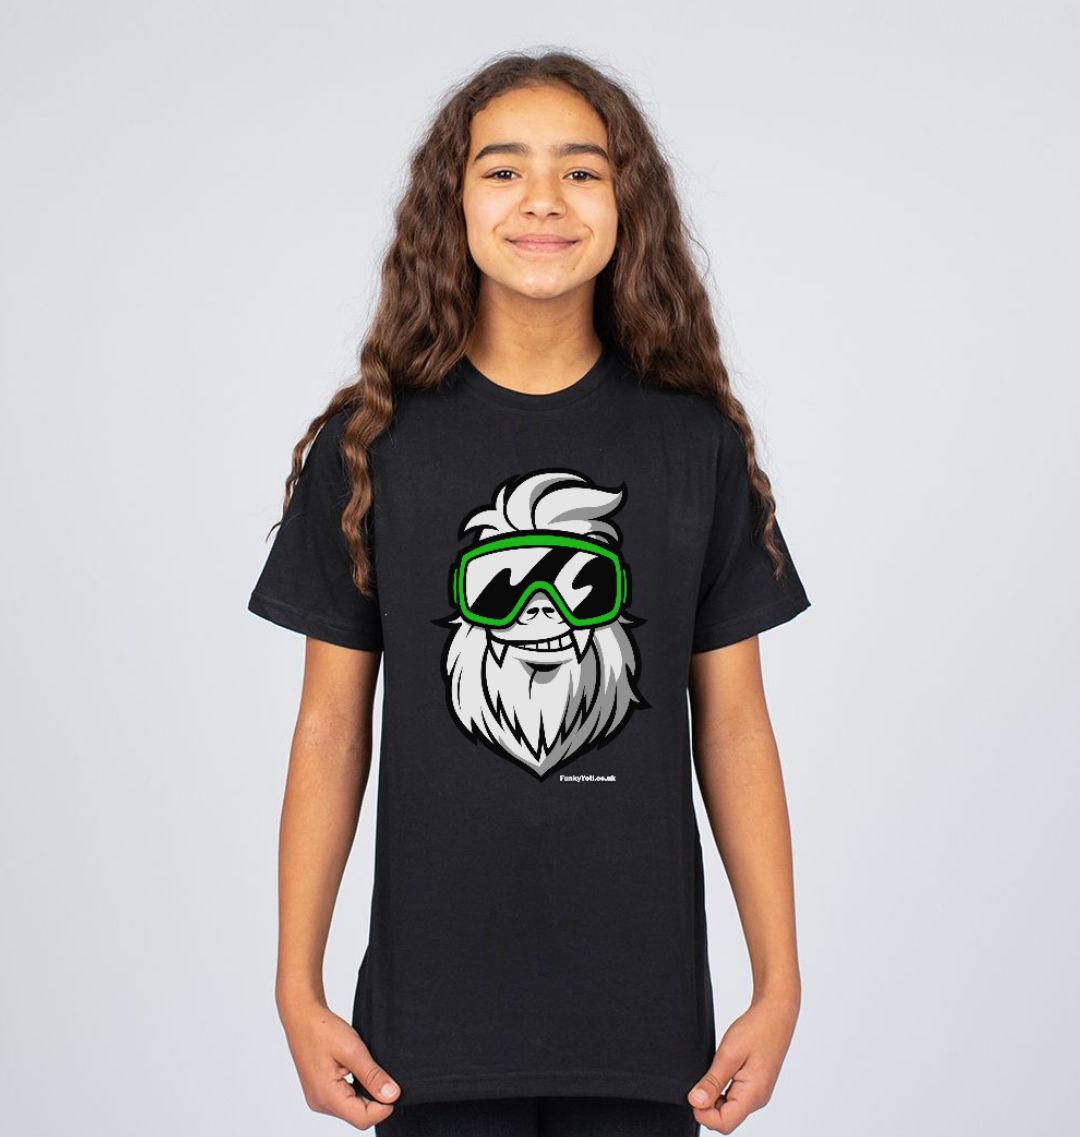 Kids Tee - Black Organic Cotton T-shirt with Big Funky Yeti logo print